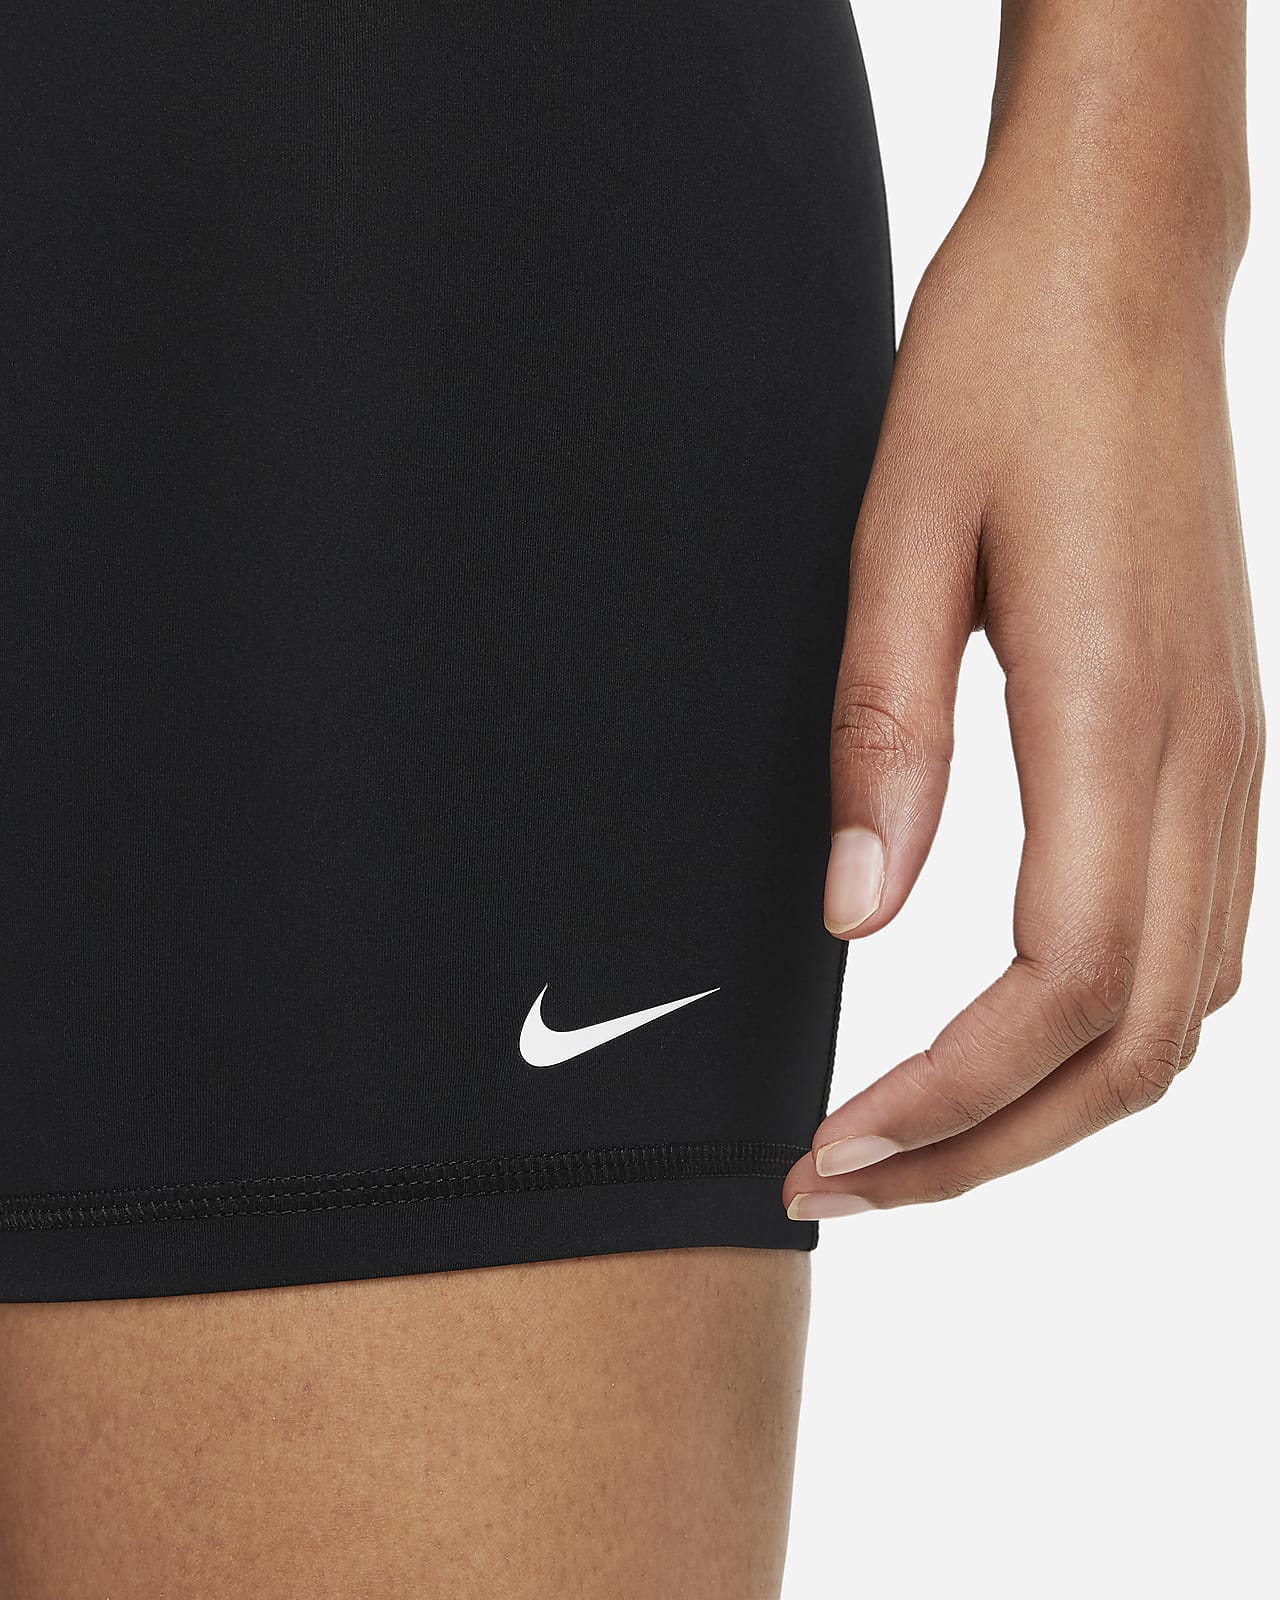 Deviate hedge Pacific Nike Pro 365 Women's 20cm (approx.) Shorts. Nike LU